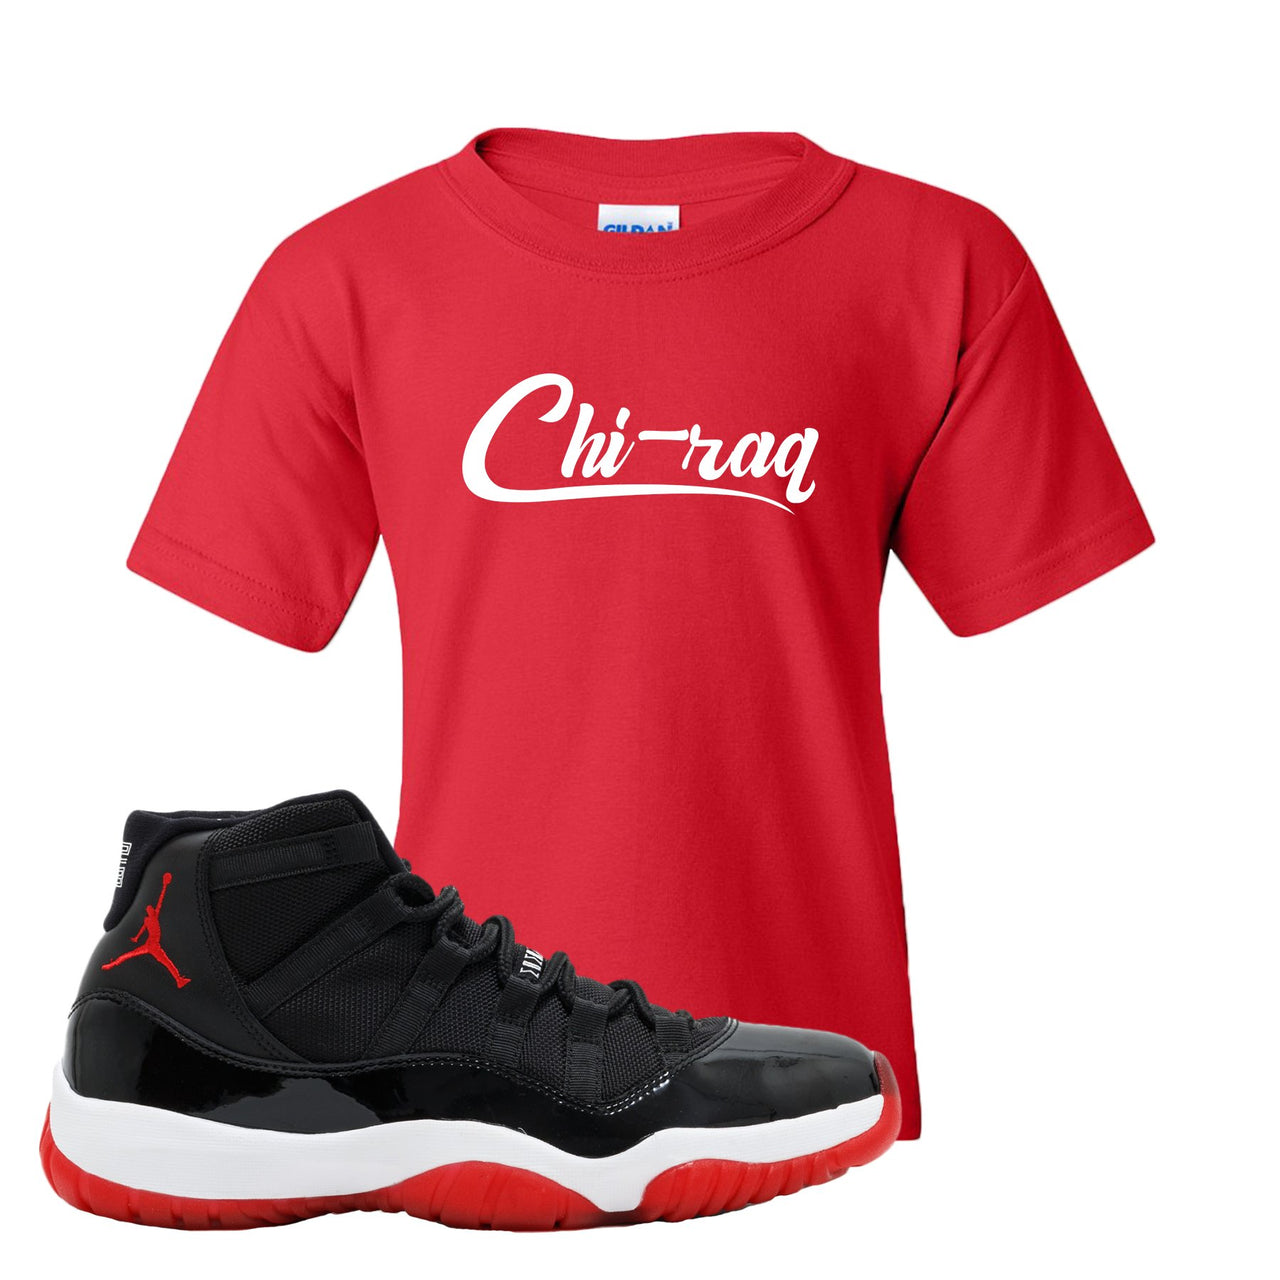 Jordan 11 Bred Chi-raq Red Sneaker Hook Up Kid's T-Shirt